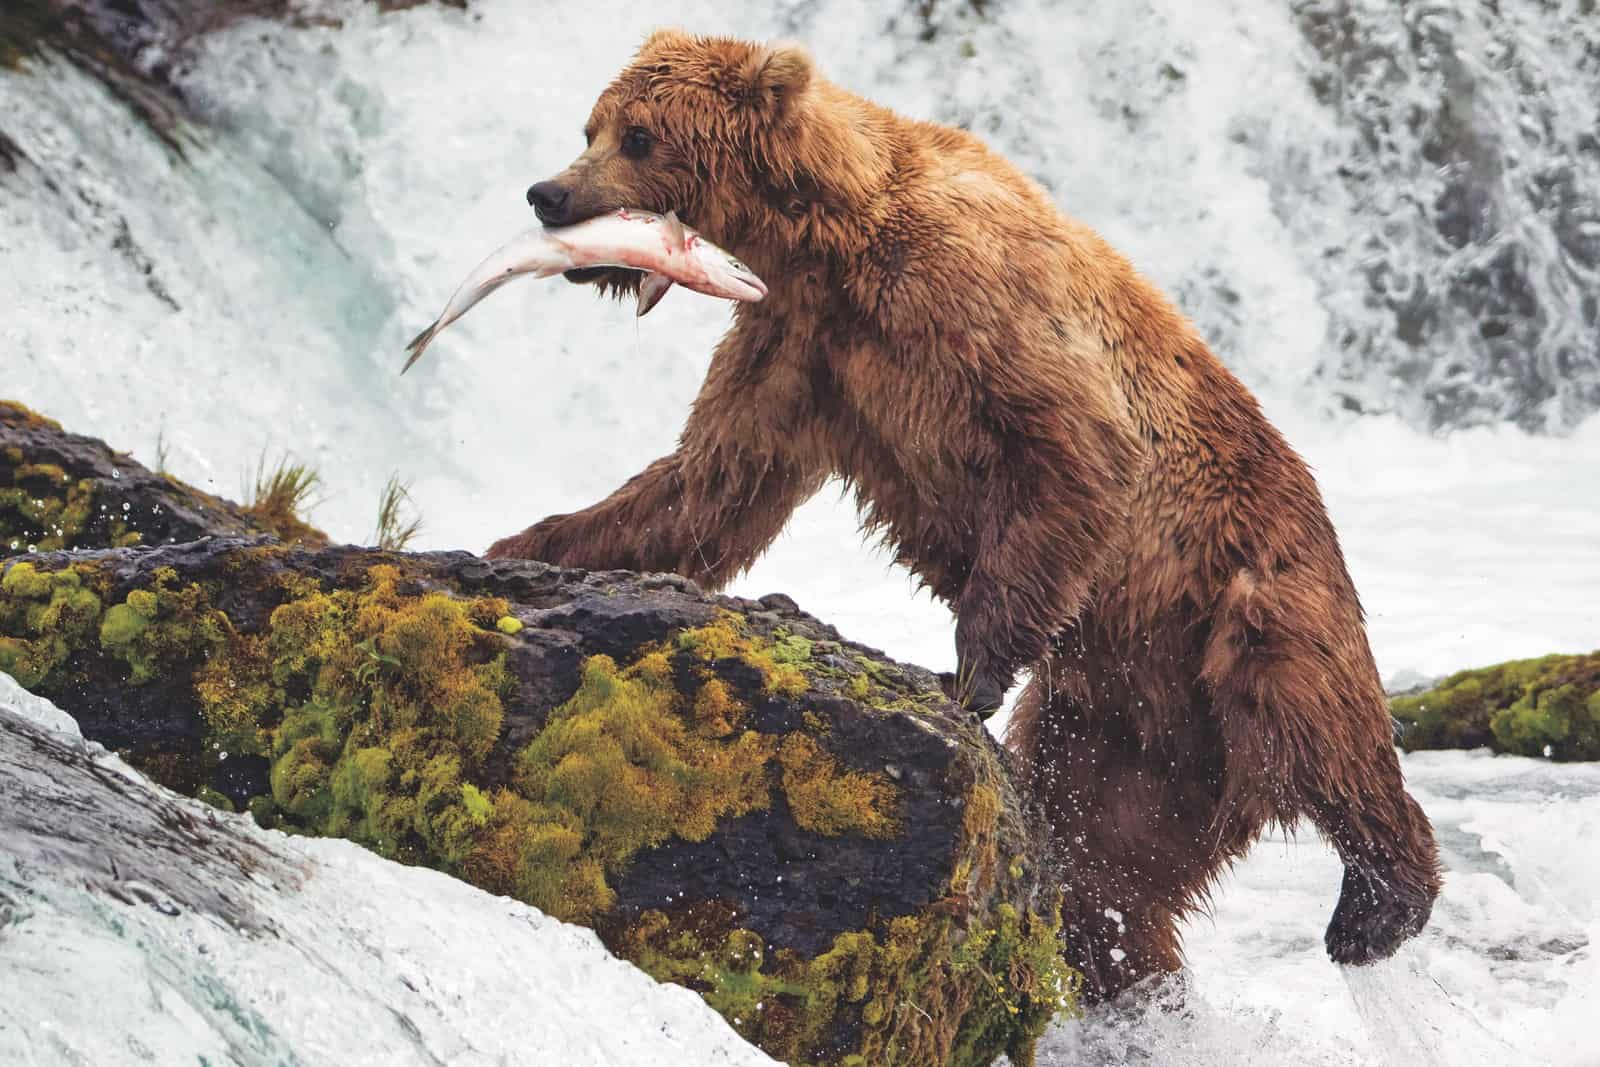 A bear catches fish at Brooks Falls